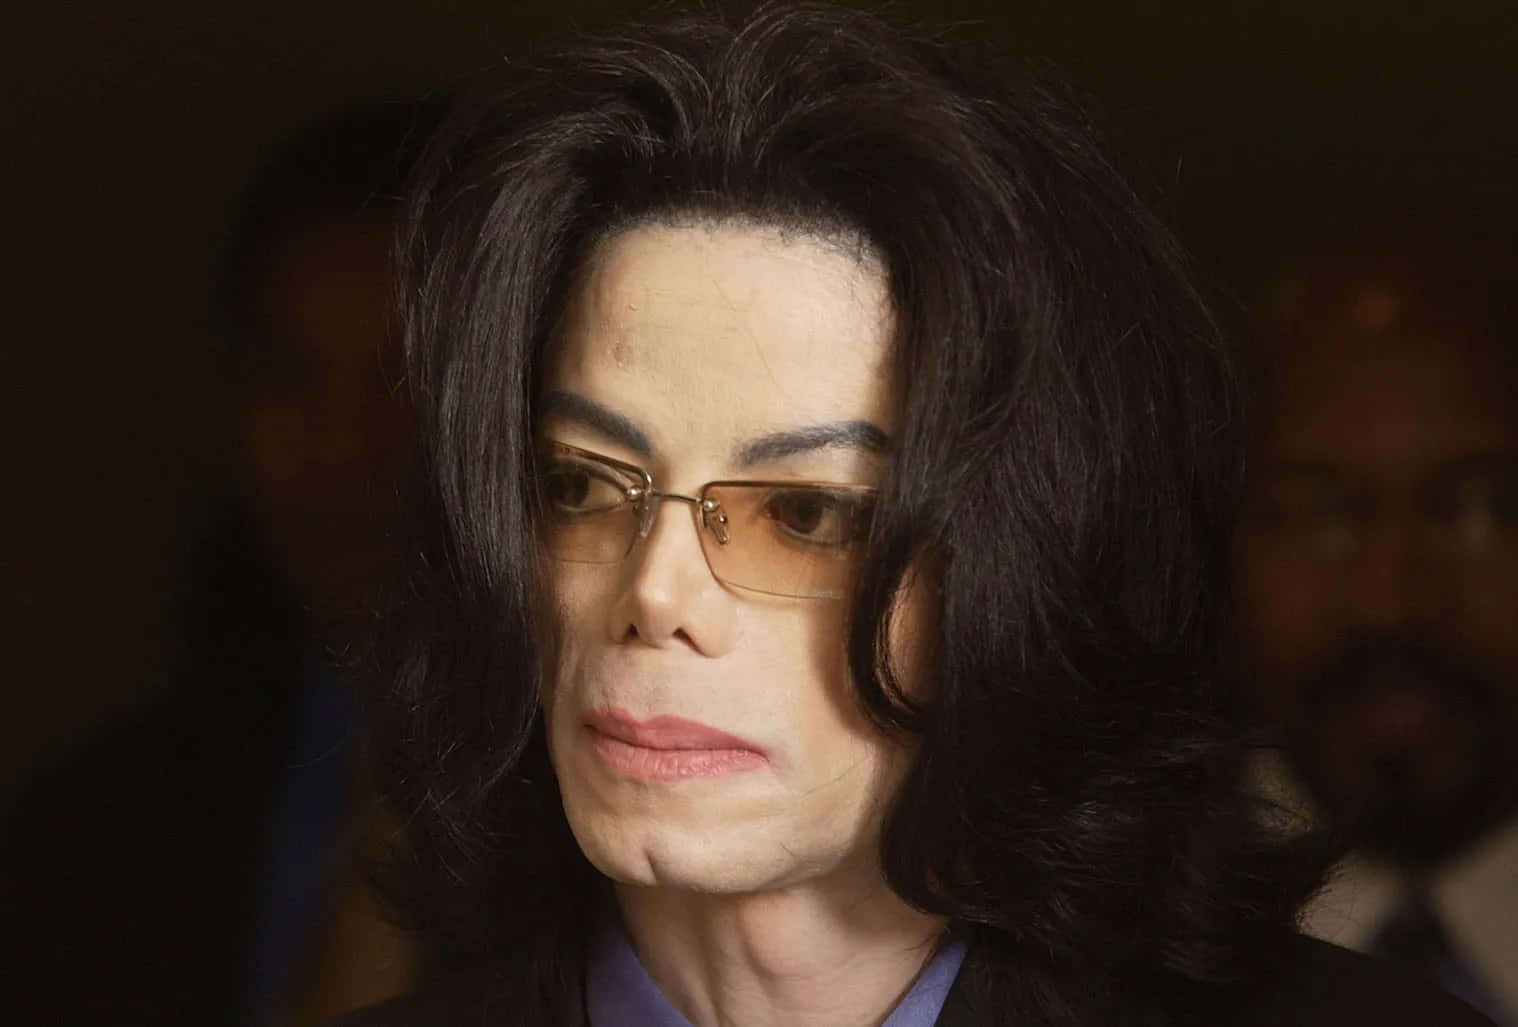 The King of Pop - Michael Jackson